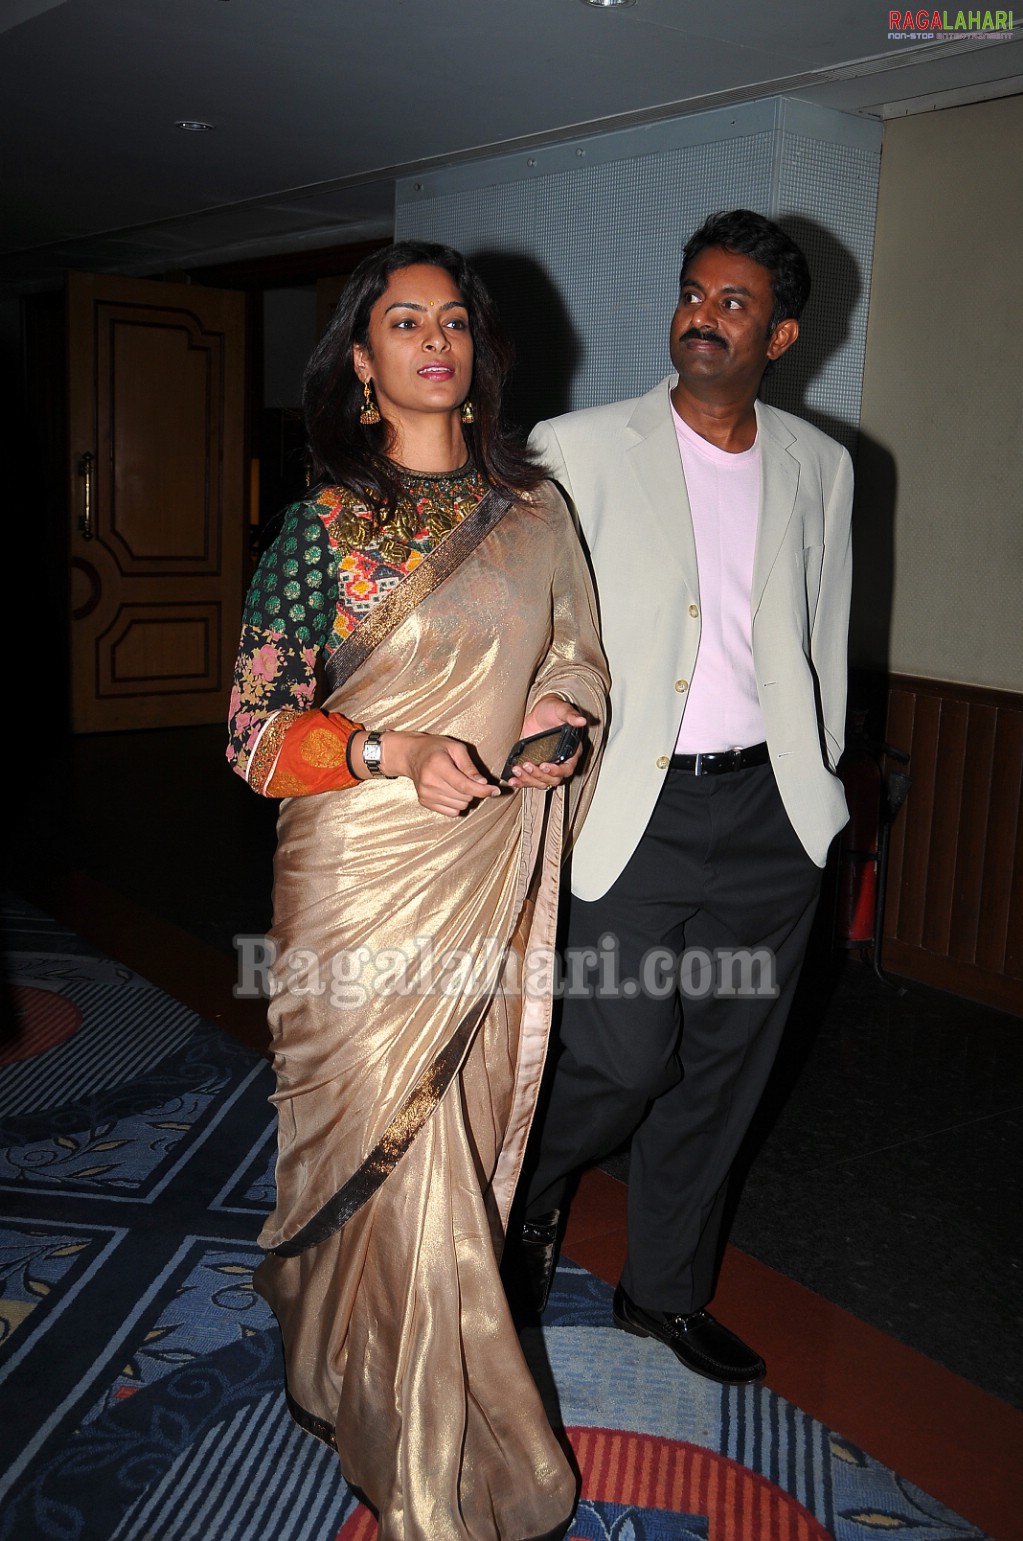 Amala, Shilpa Reddy walks on the Ramp for KIMS-The Pink Ribbon Awards Night 2010